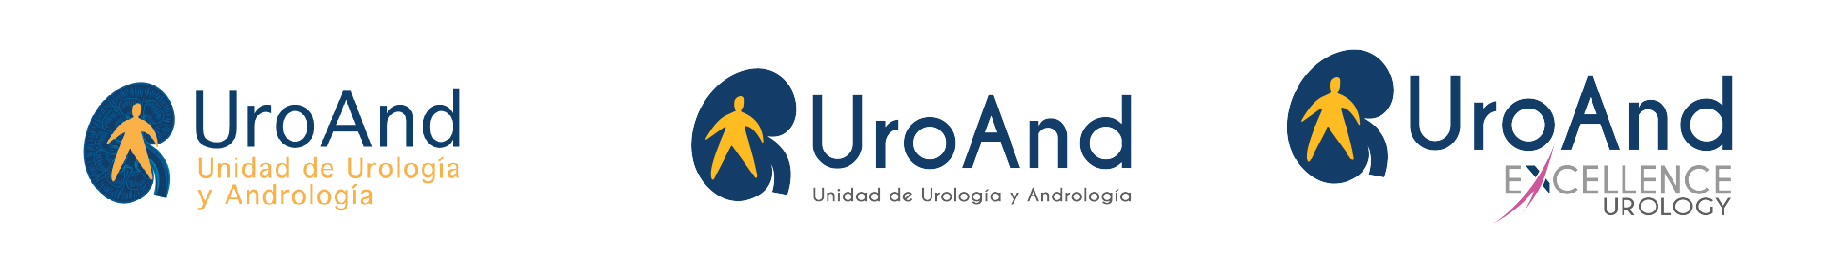 rebranding-logo-uroand-excellence-urology-agencia-t2k